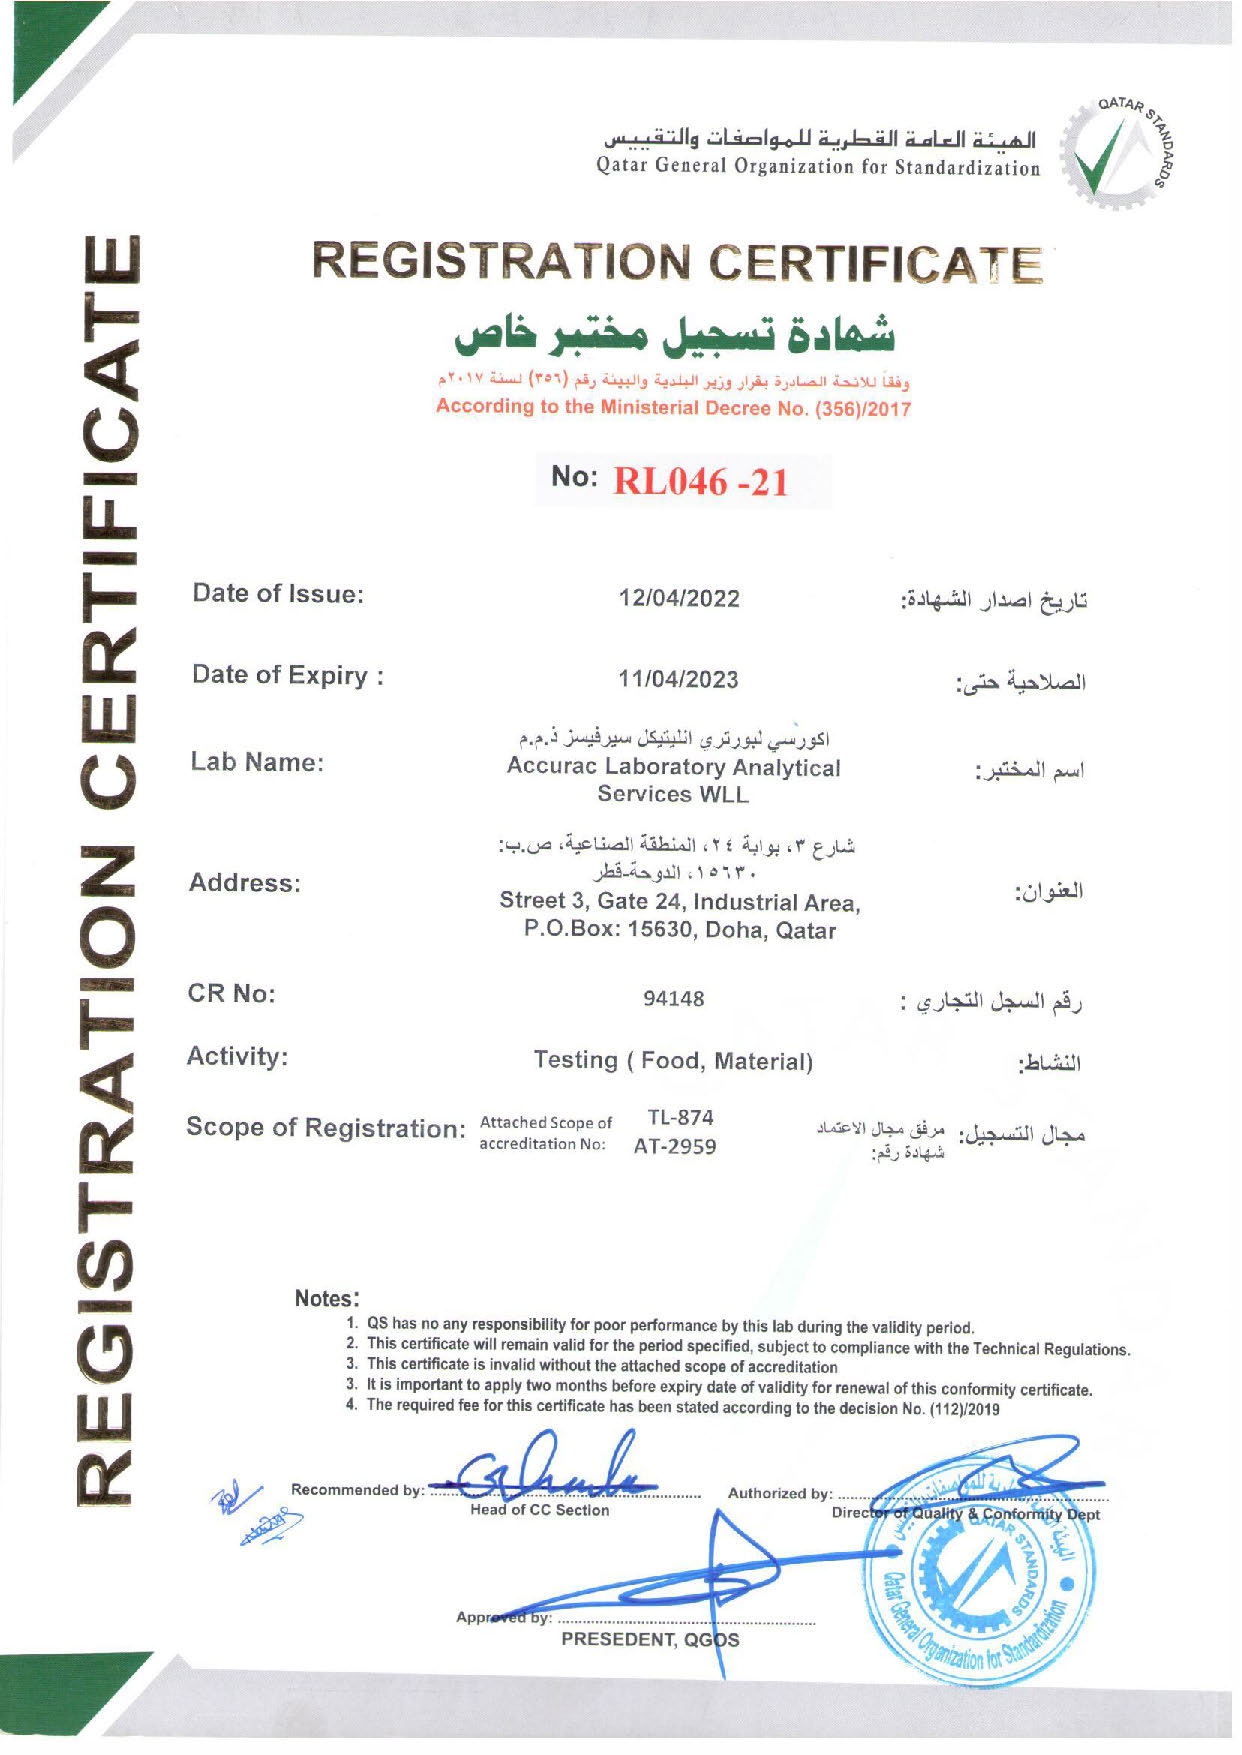 Qatar Standardisation Certificate - Accurac Laboratory